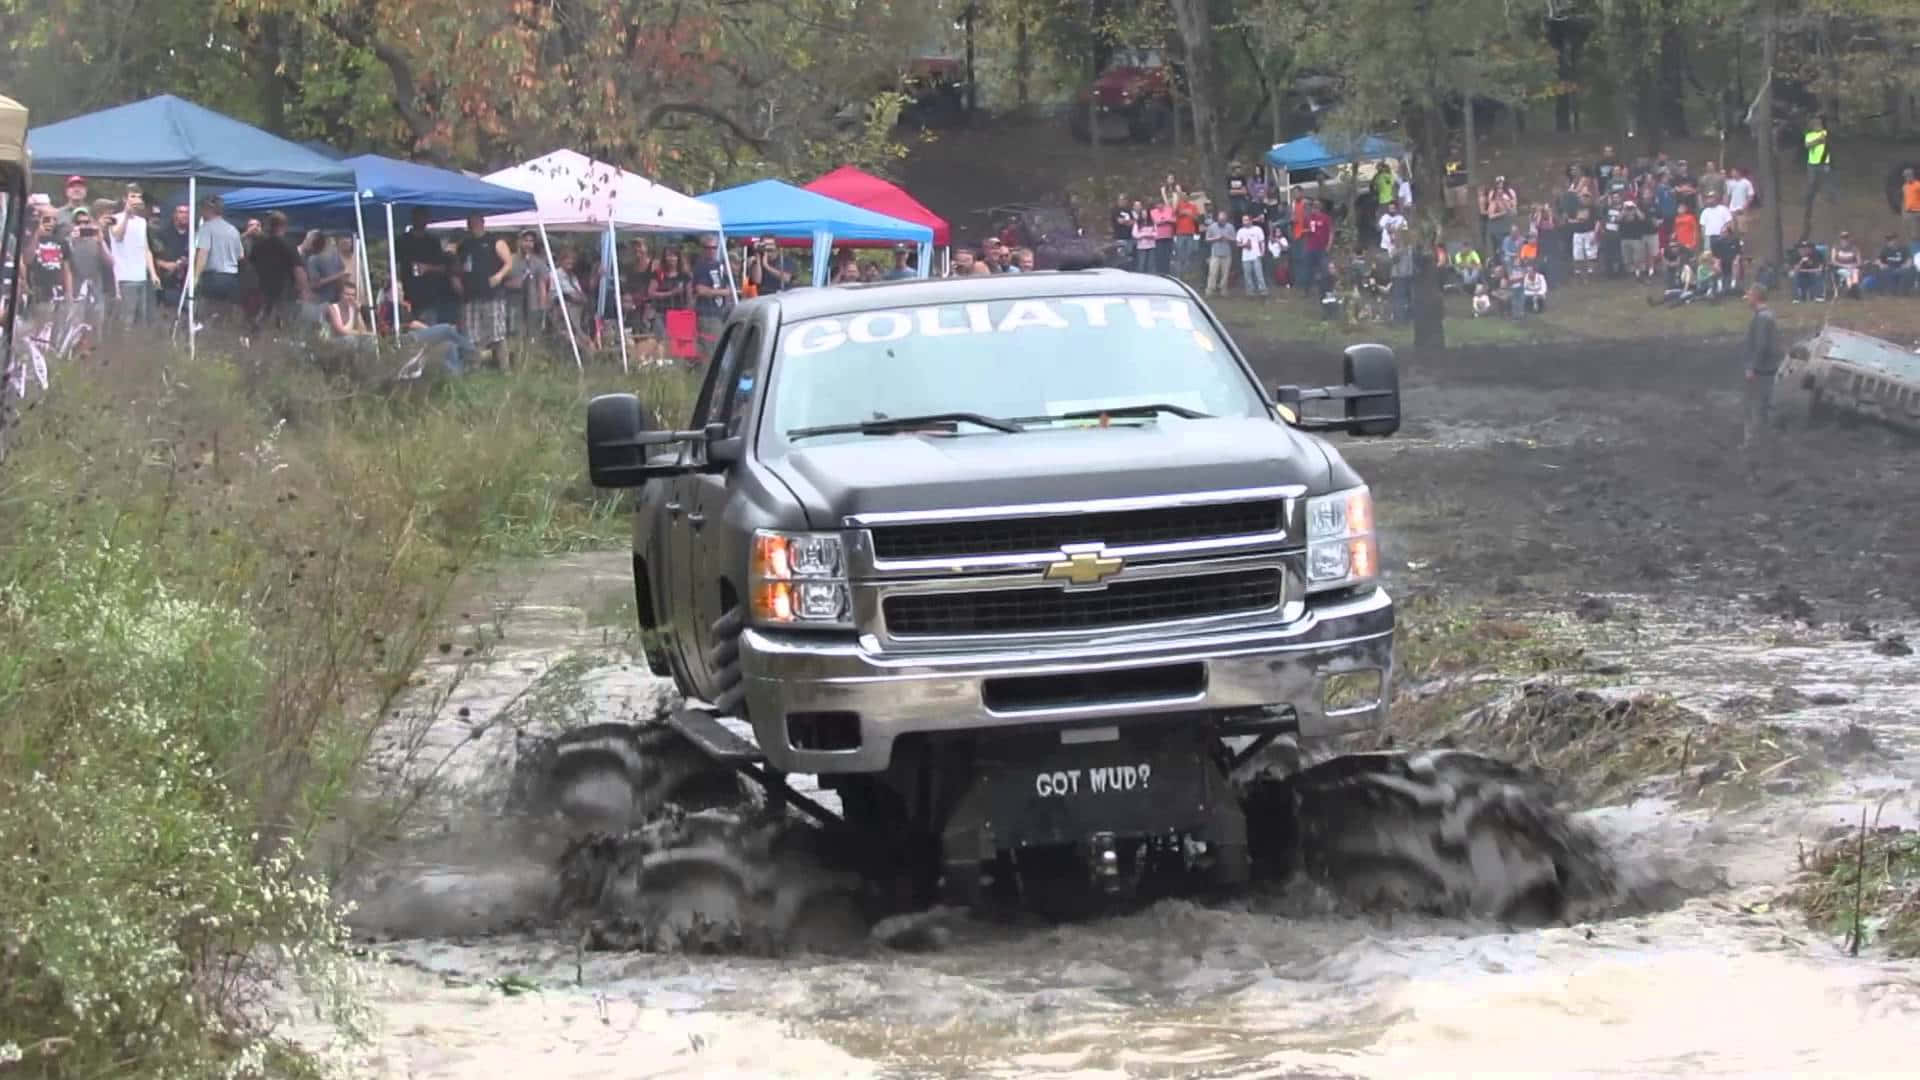 A Truck Driving Through Mud At A Festival Wallpaper